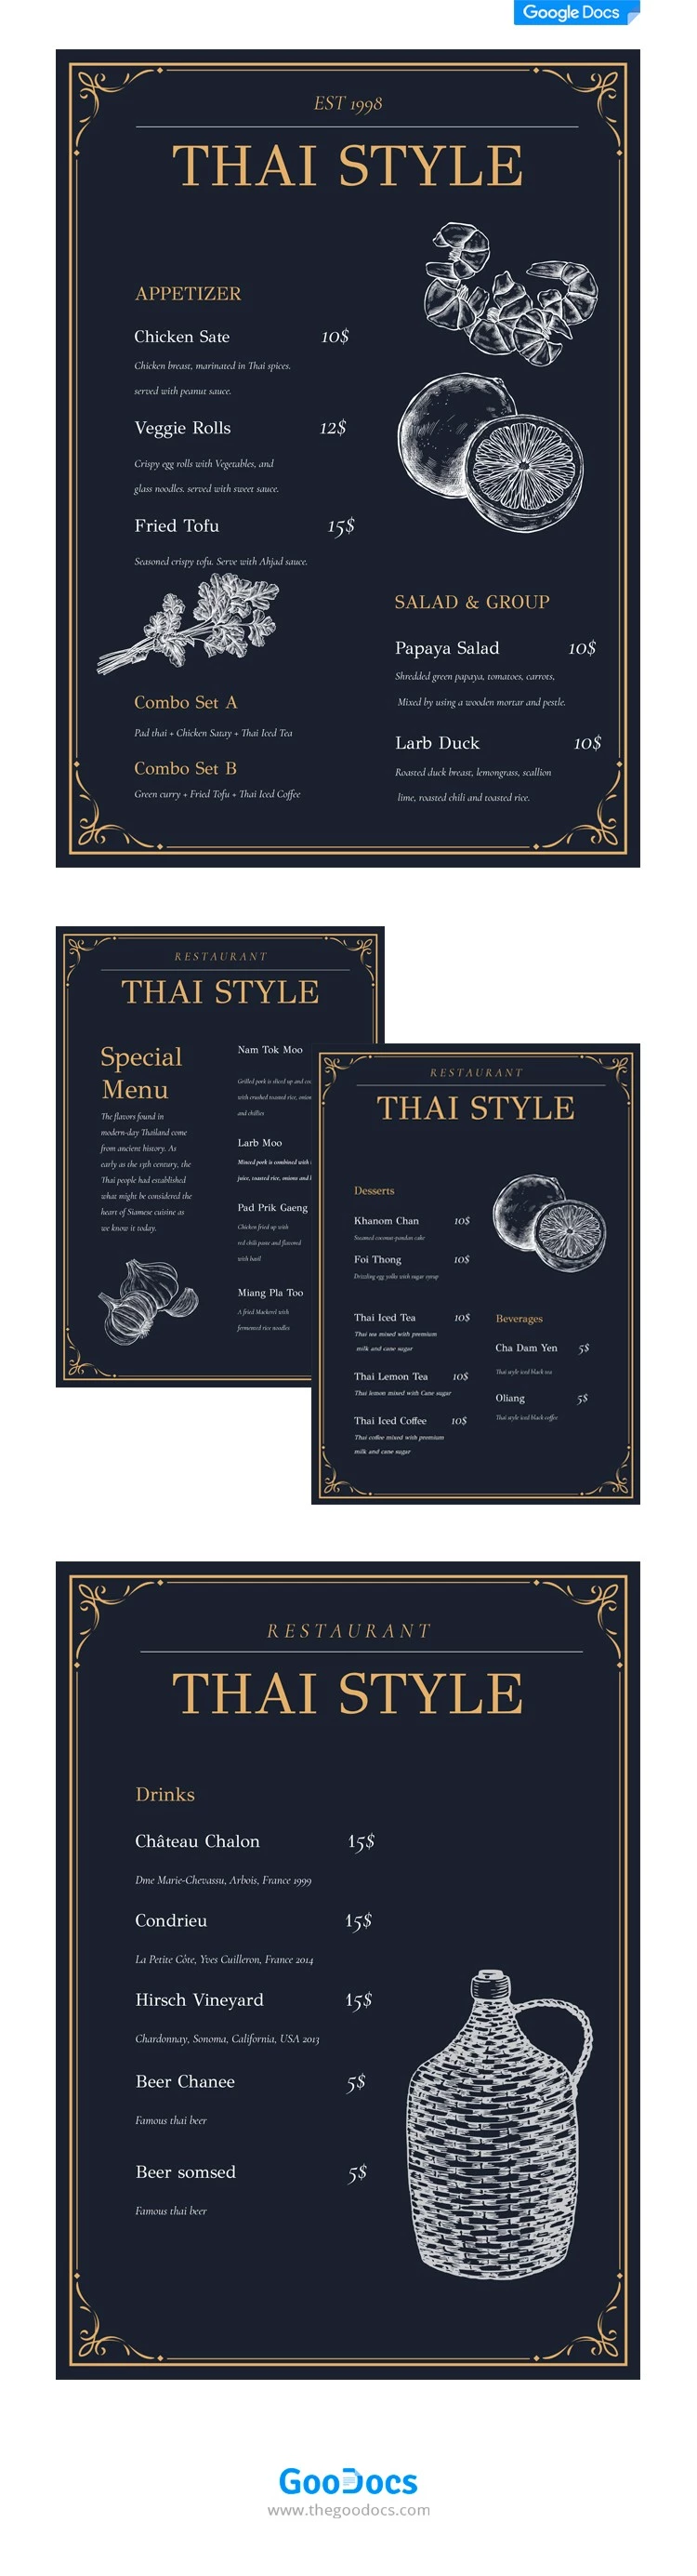 Menu de style thaï - free Google Docs Template - 10062037